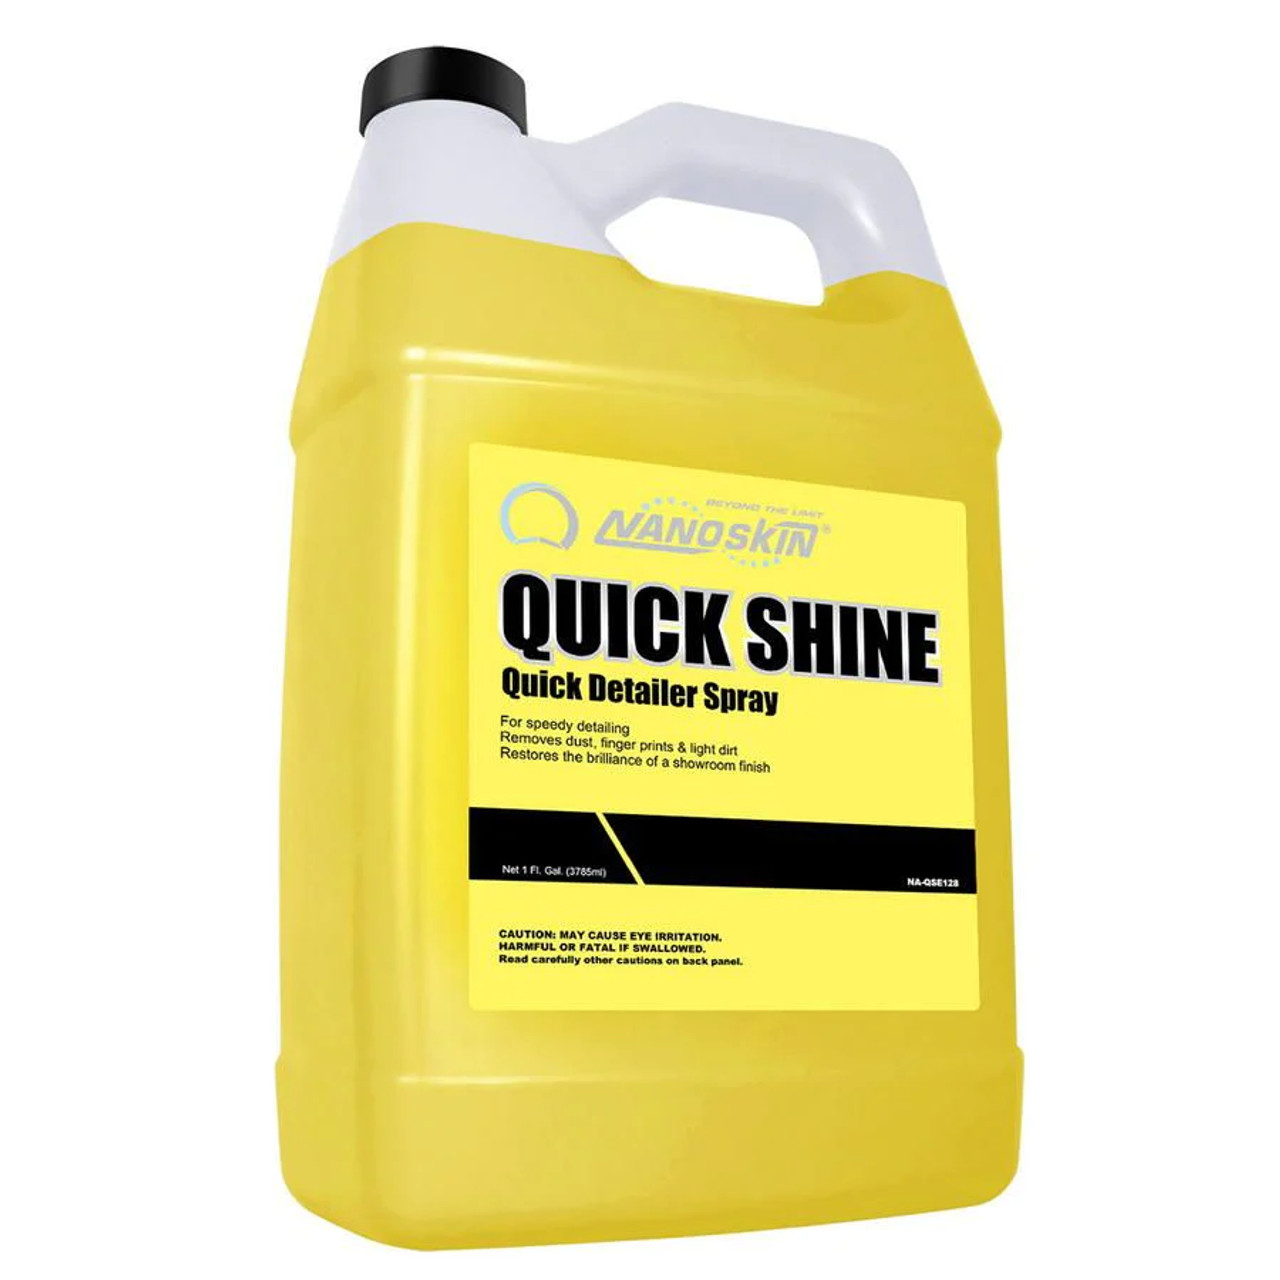 NanoSkin QUICK SHINE Quick Detailer Spray RTU